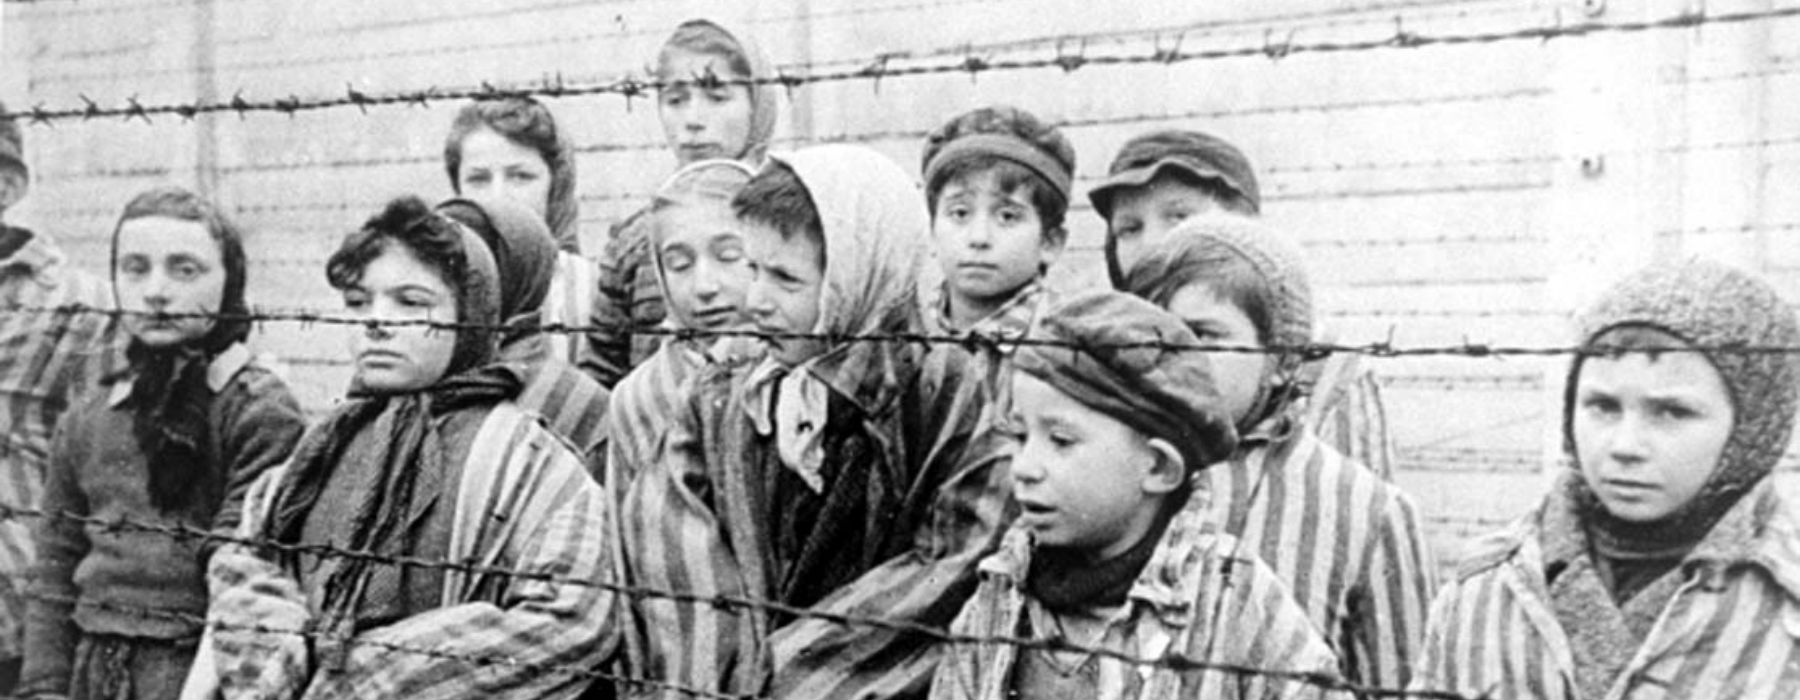 Ragazzi sopravvissuti all'olocausto